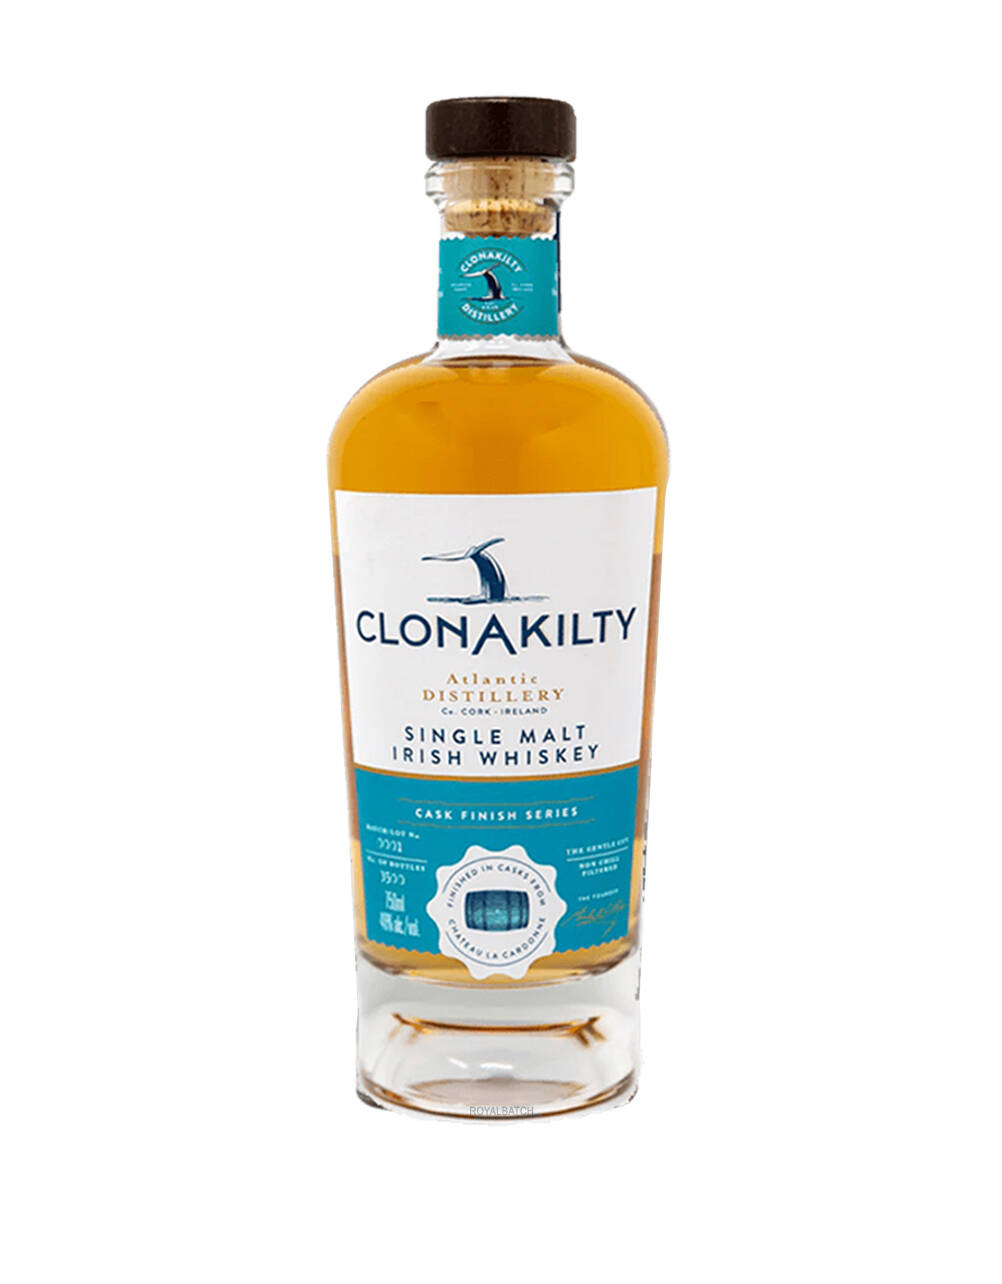 Clonakilty Single Malt Bordeaux Cask Finish Series Irish Whiskey